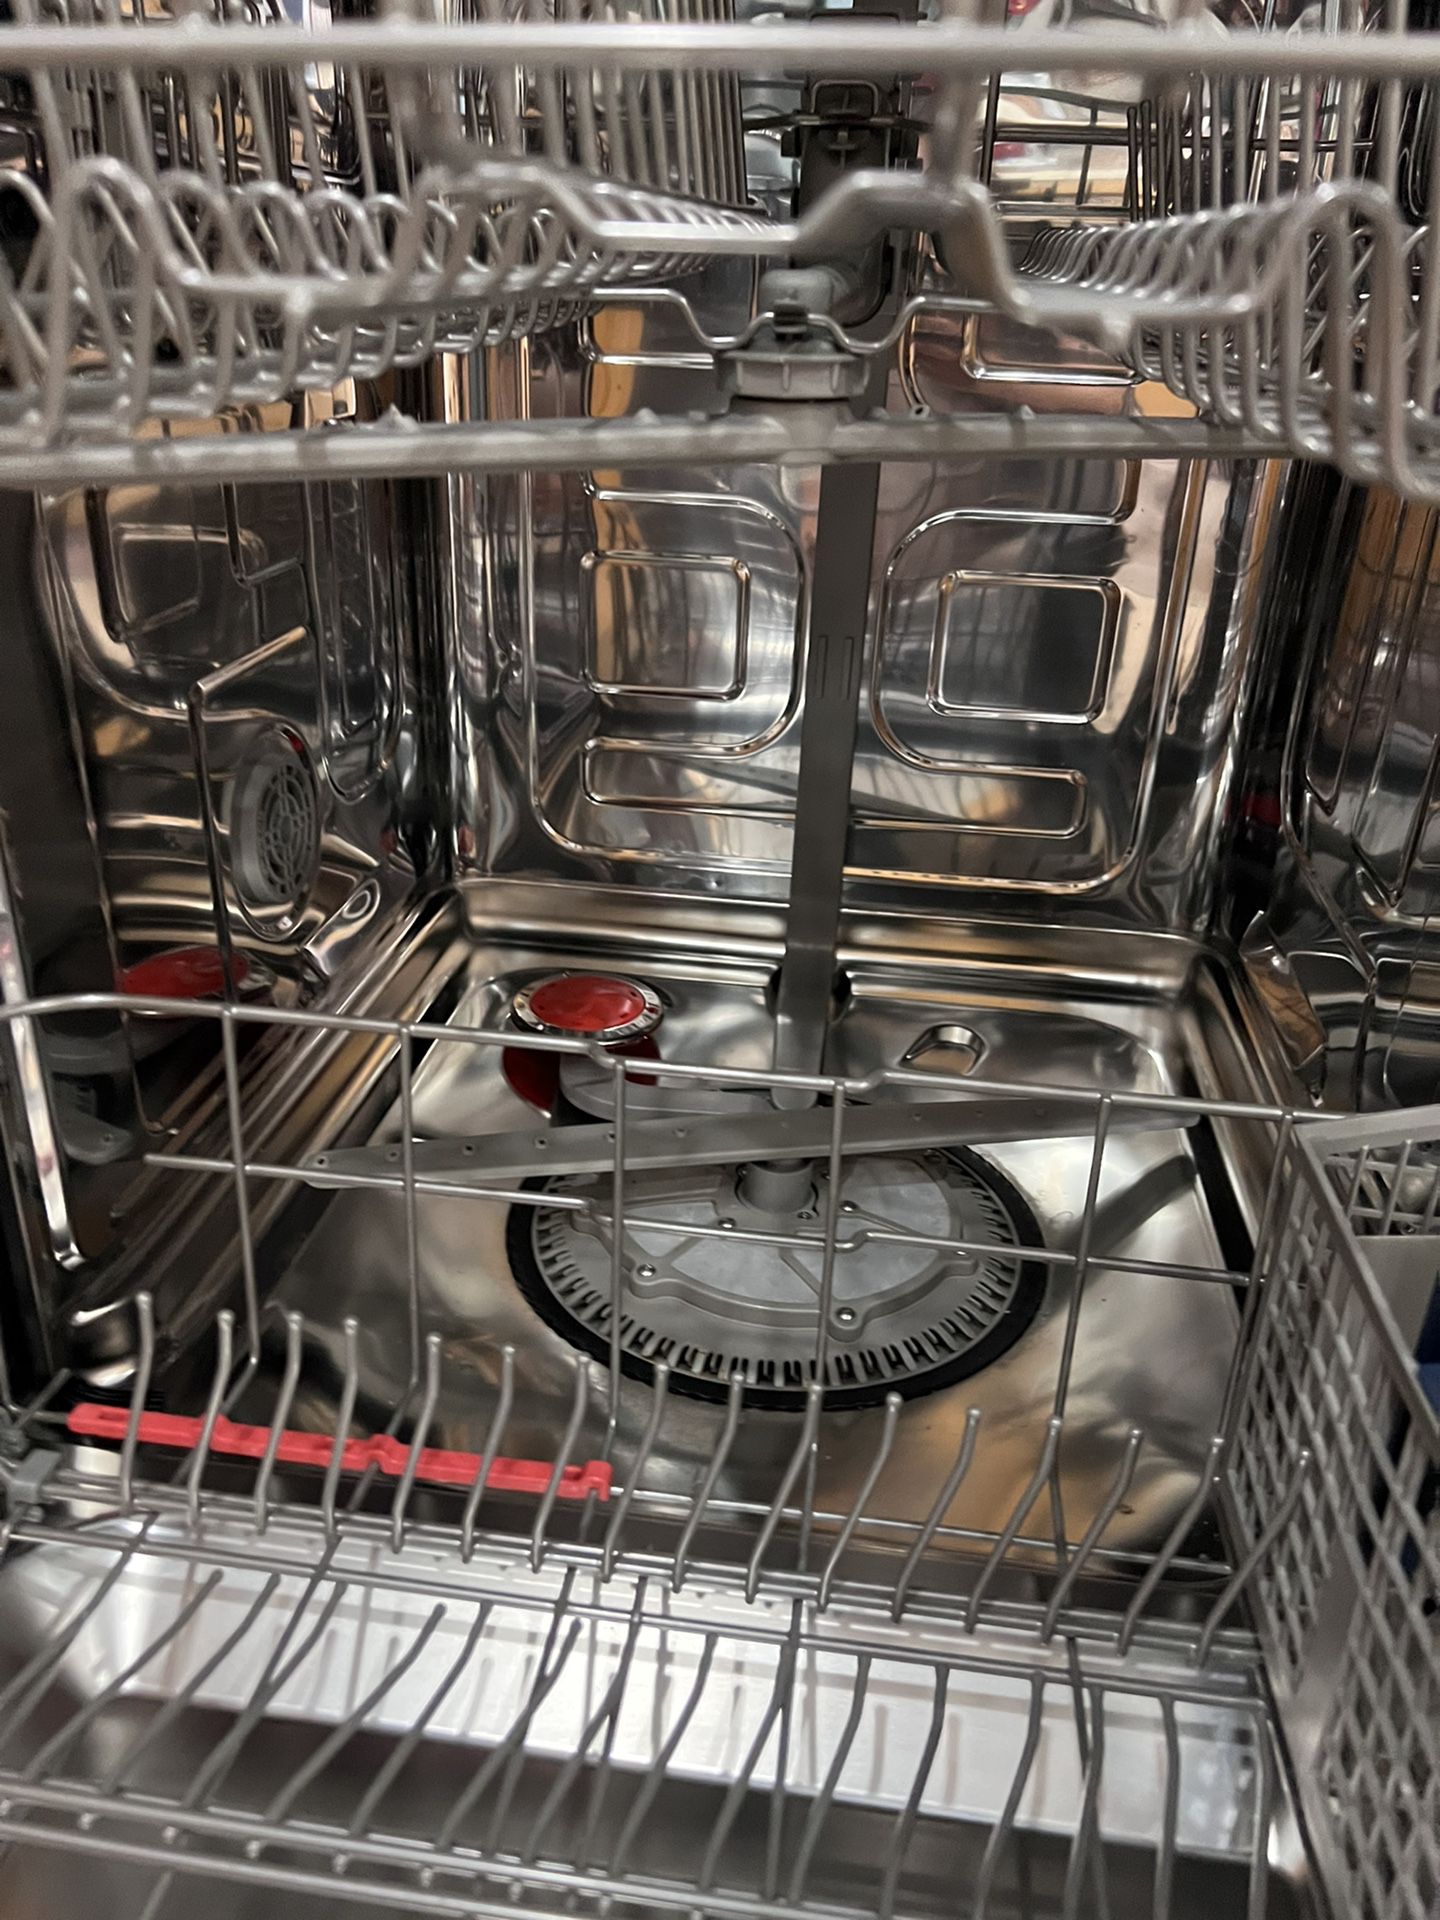 Sumsung Stainless Steel  Dishwasher